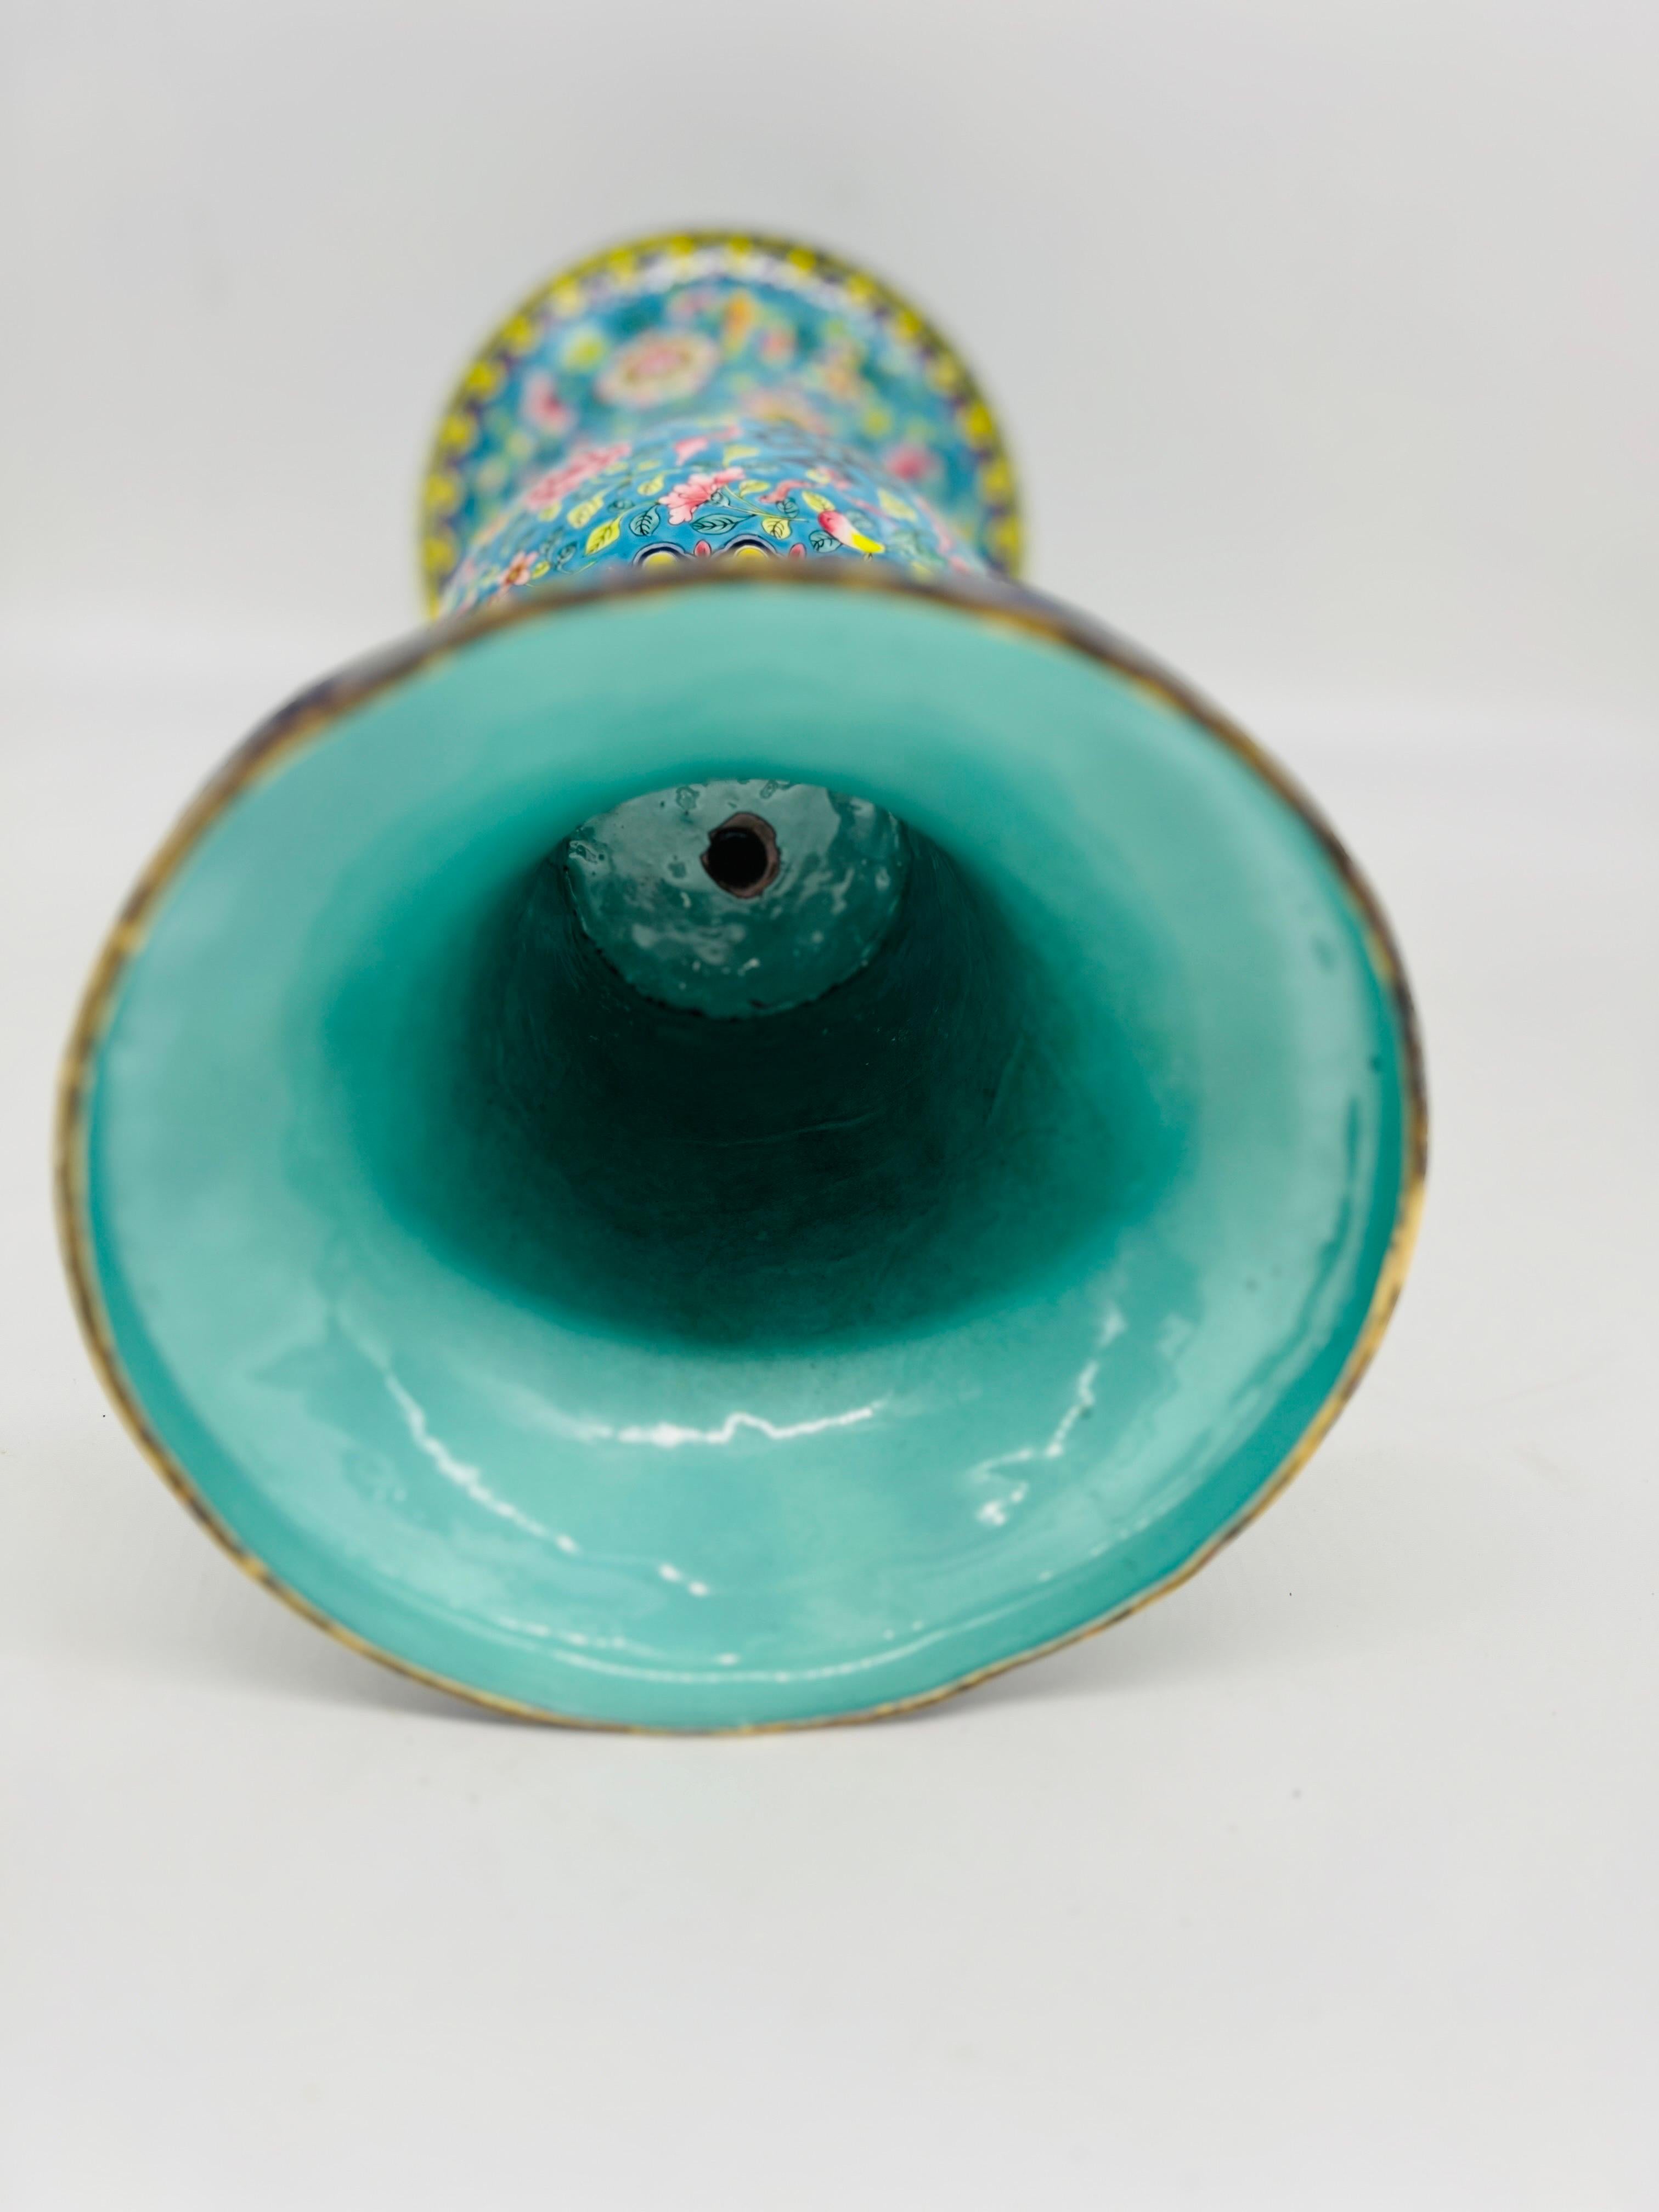 Fine Quality Chinese Export Enamel on Copper Gu Form Vase 15